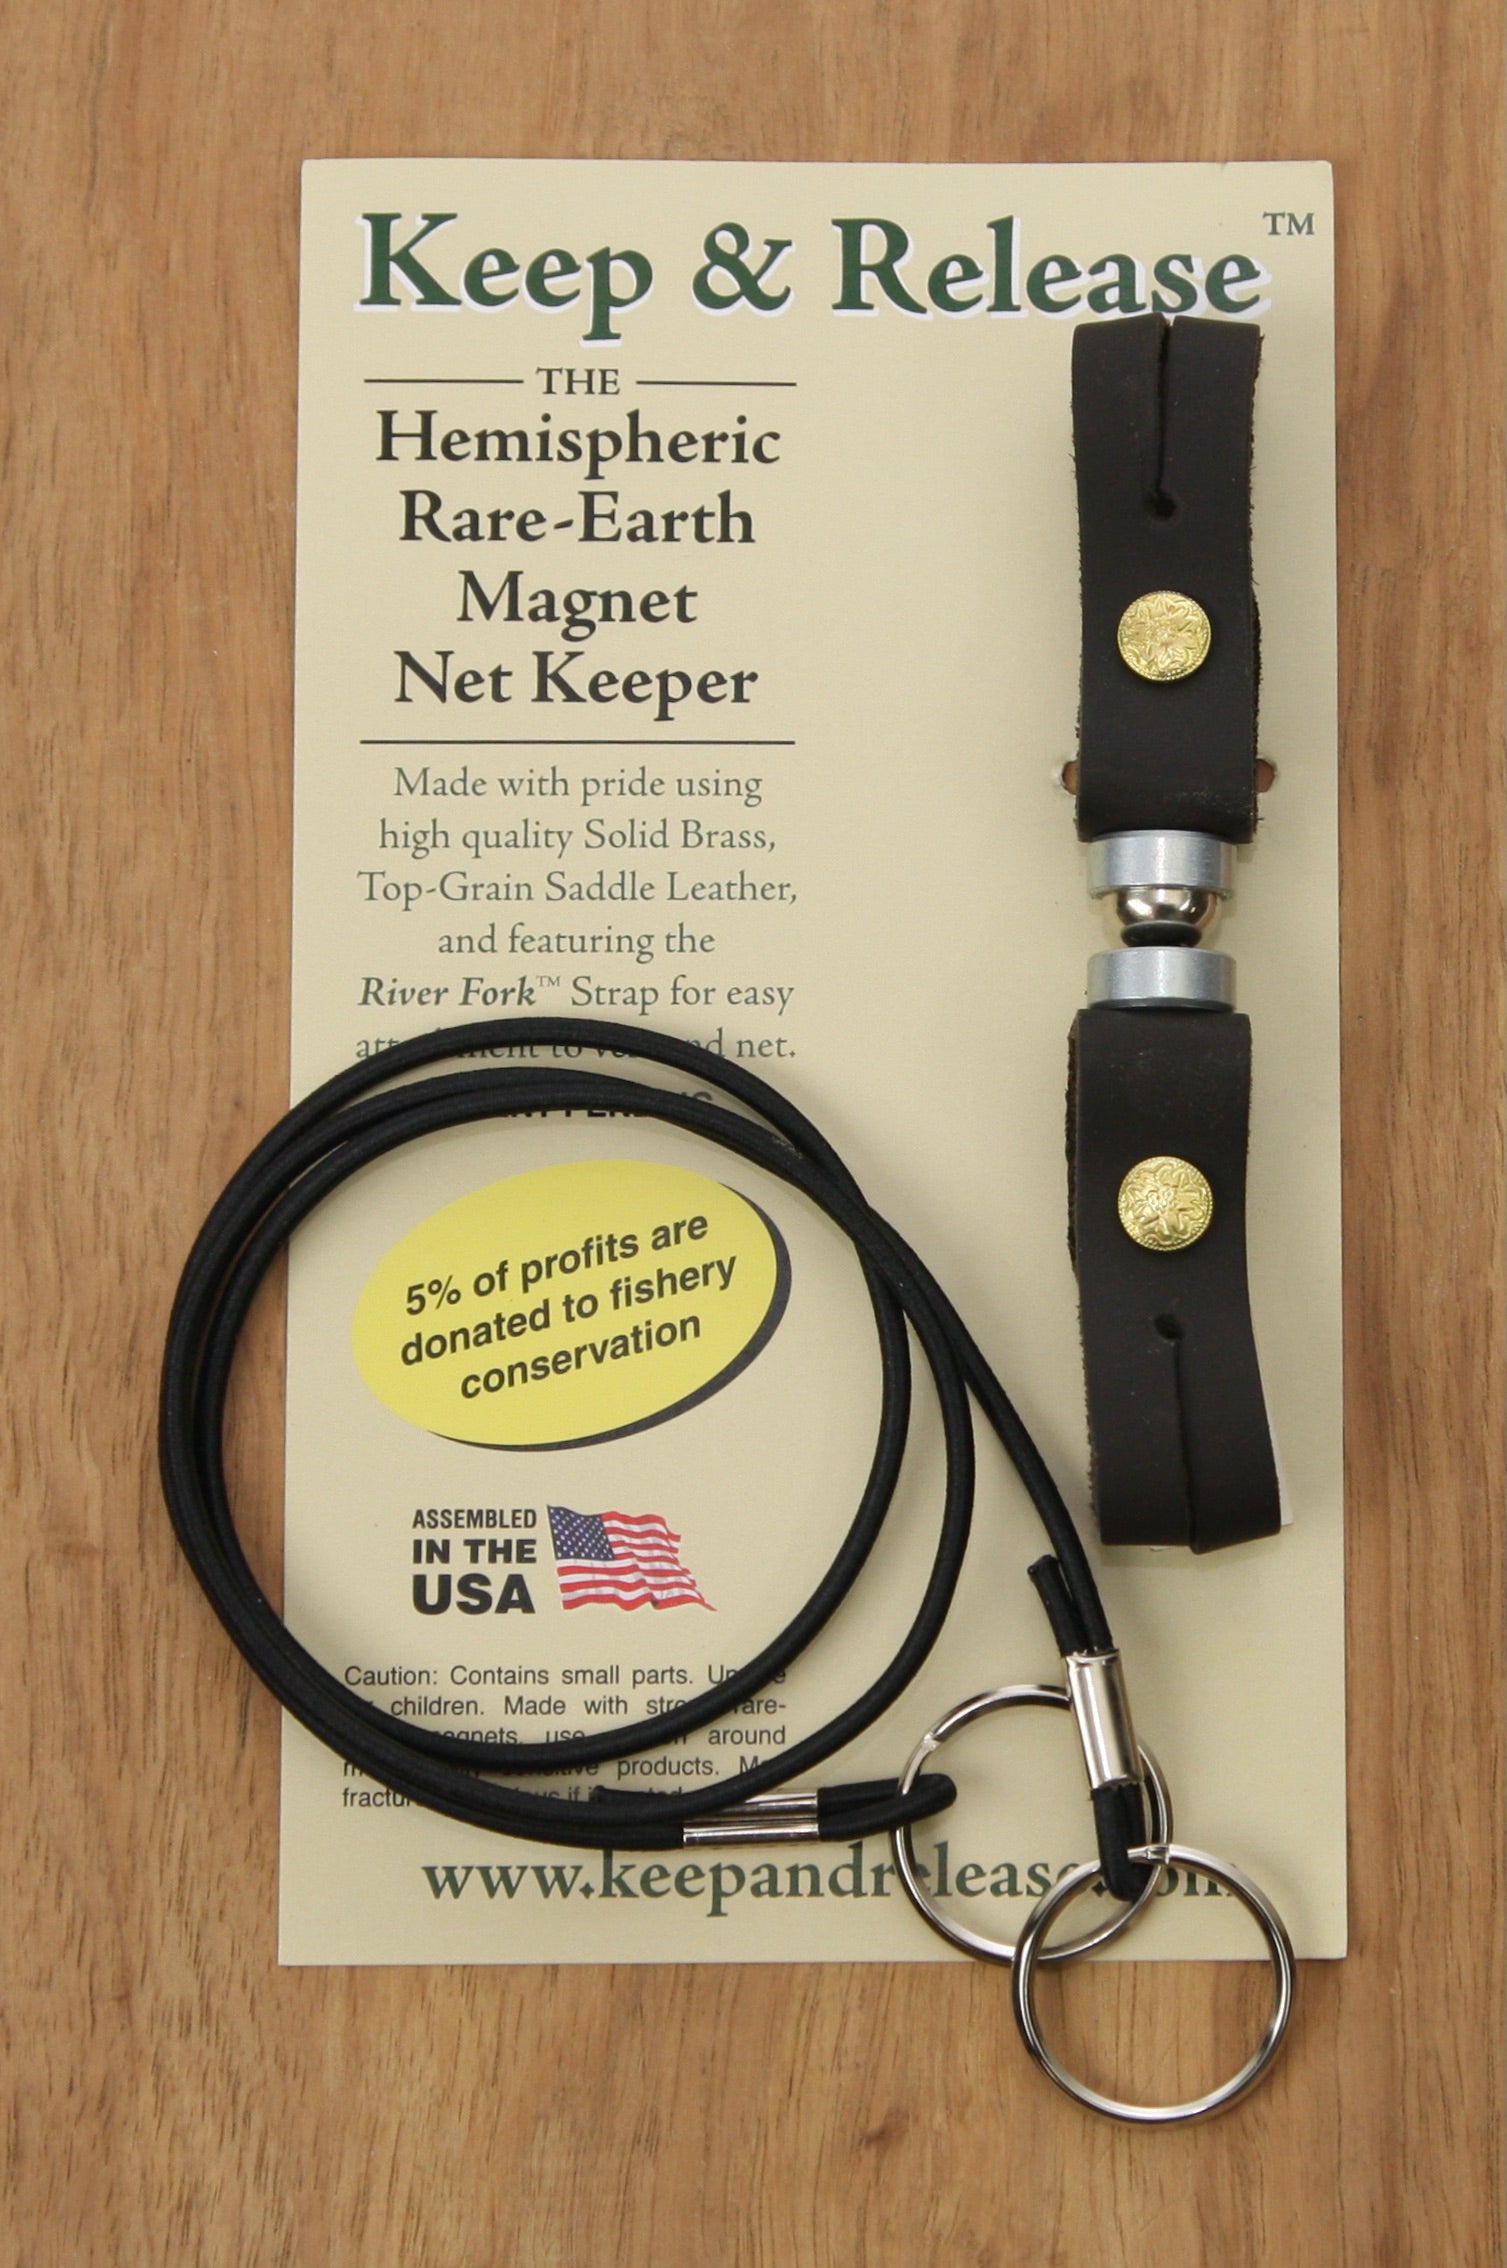 The original Keep and Release Hemispheric Magnetic Net Keeper